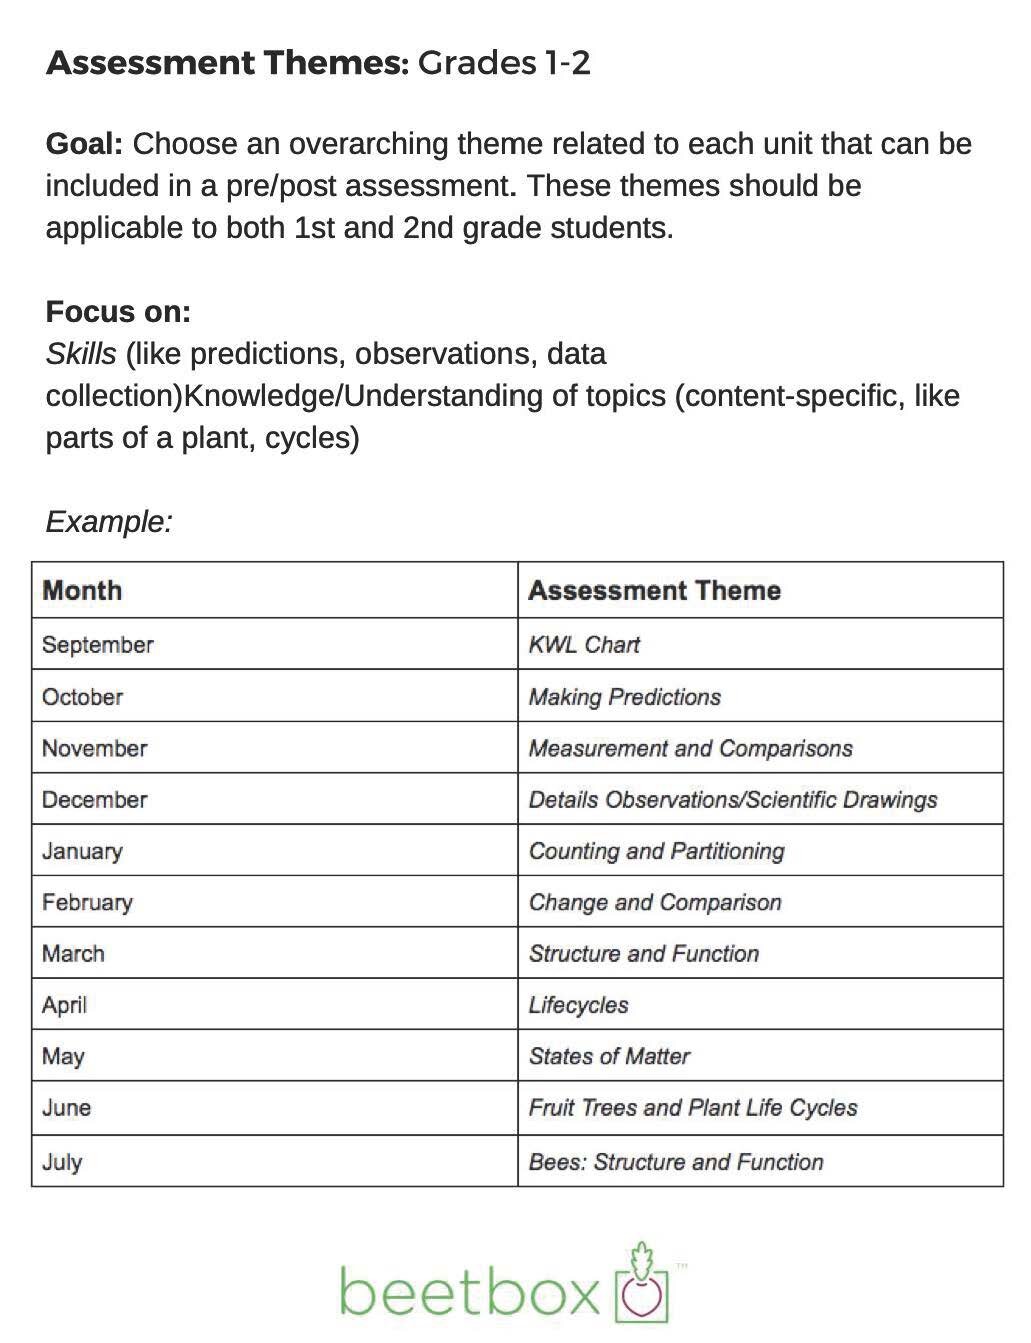 Assessment Themes